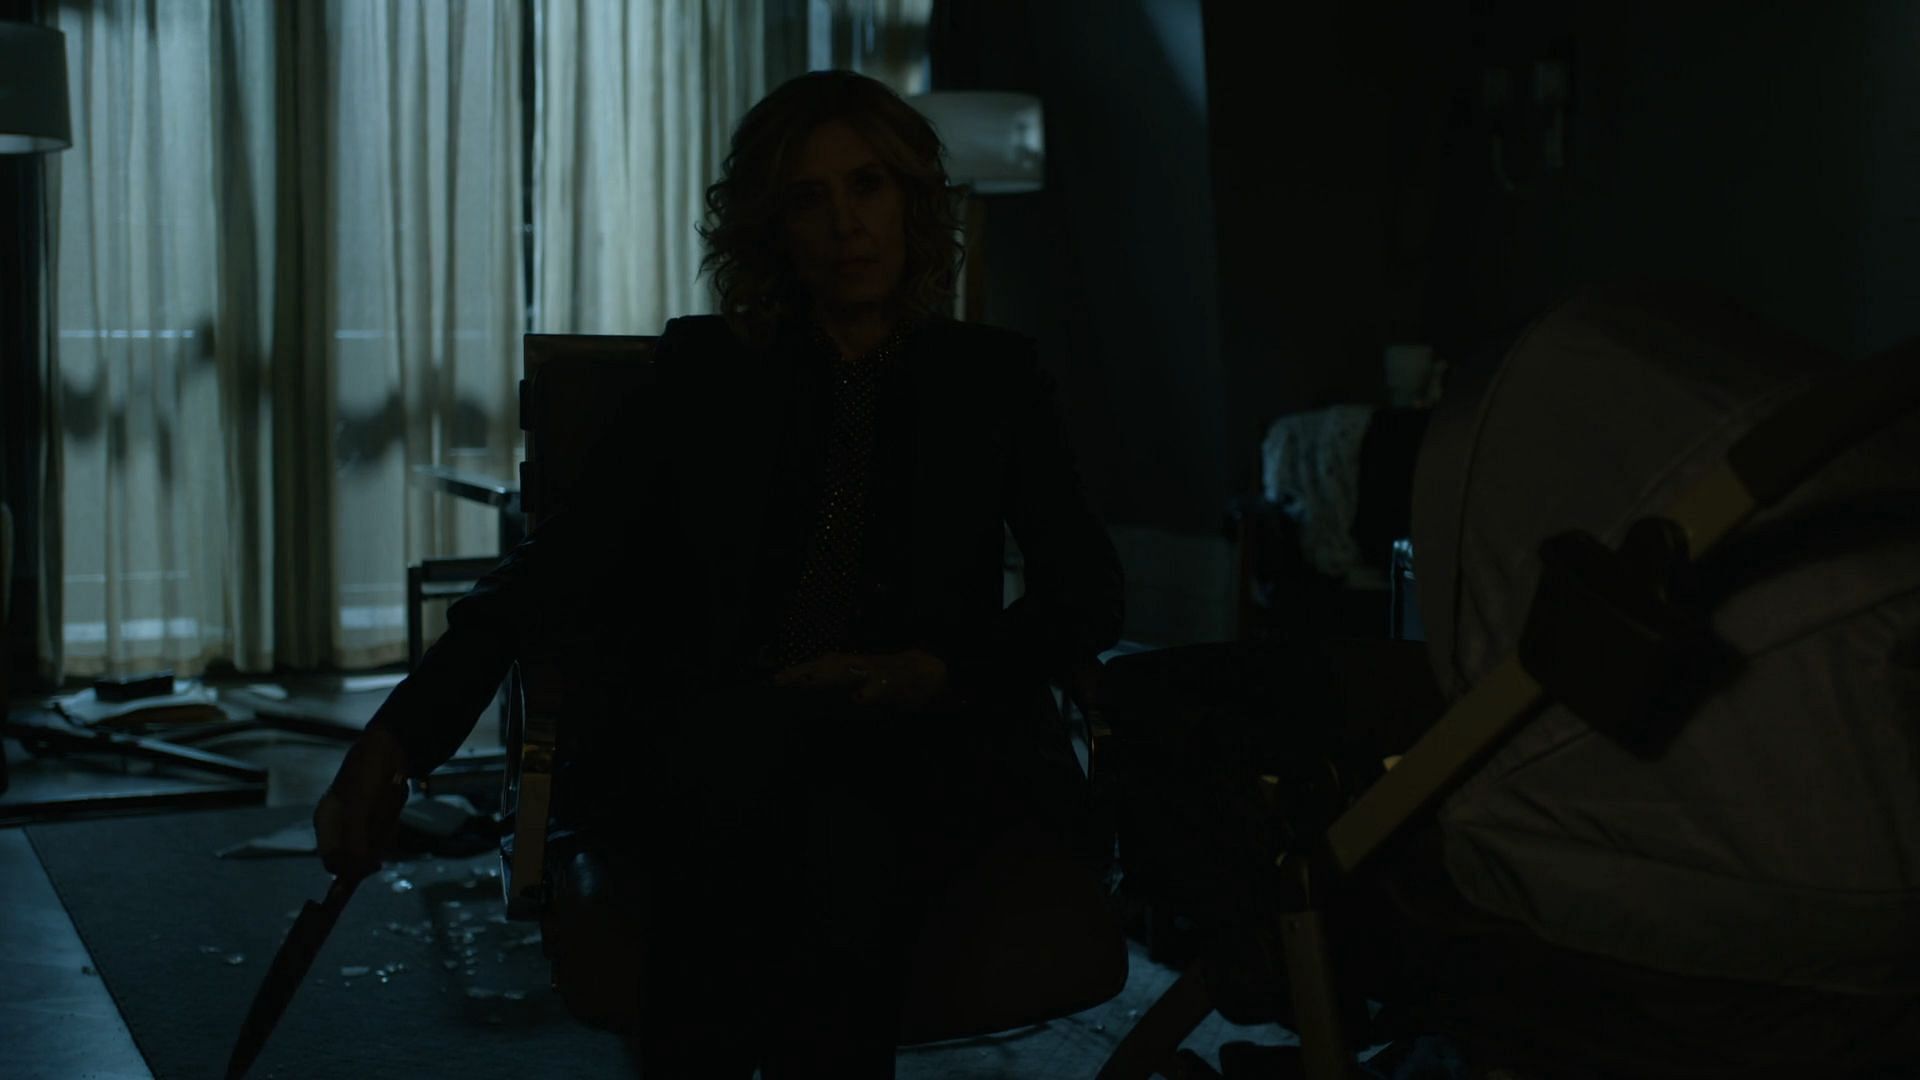 Sheryl waiting for Leland in the dark, as seen in Evil season 4 episode 6 (Image via Paramount+)